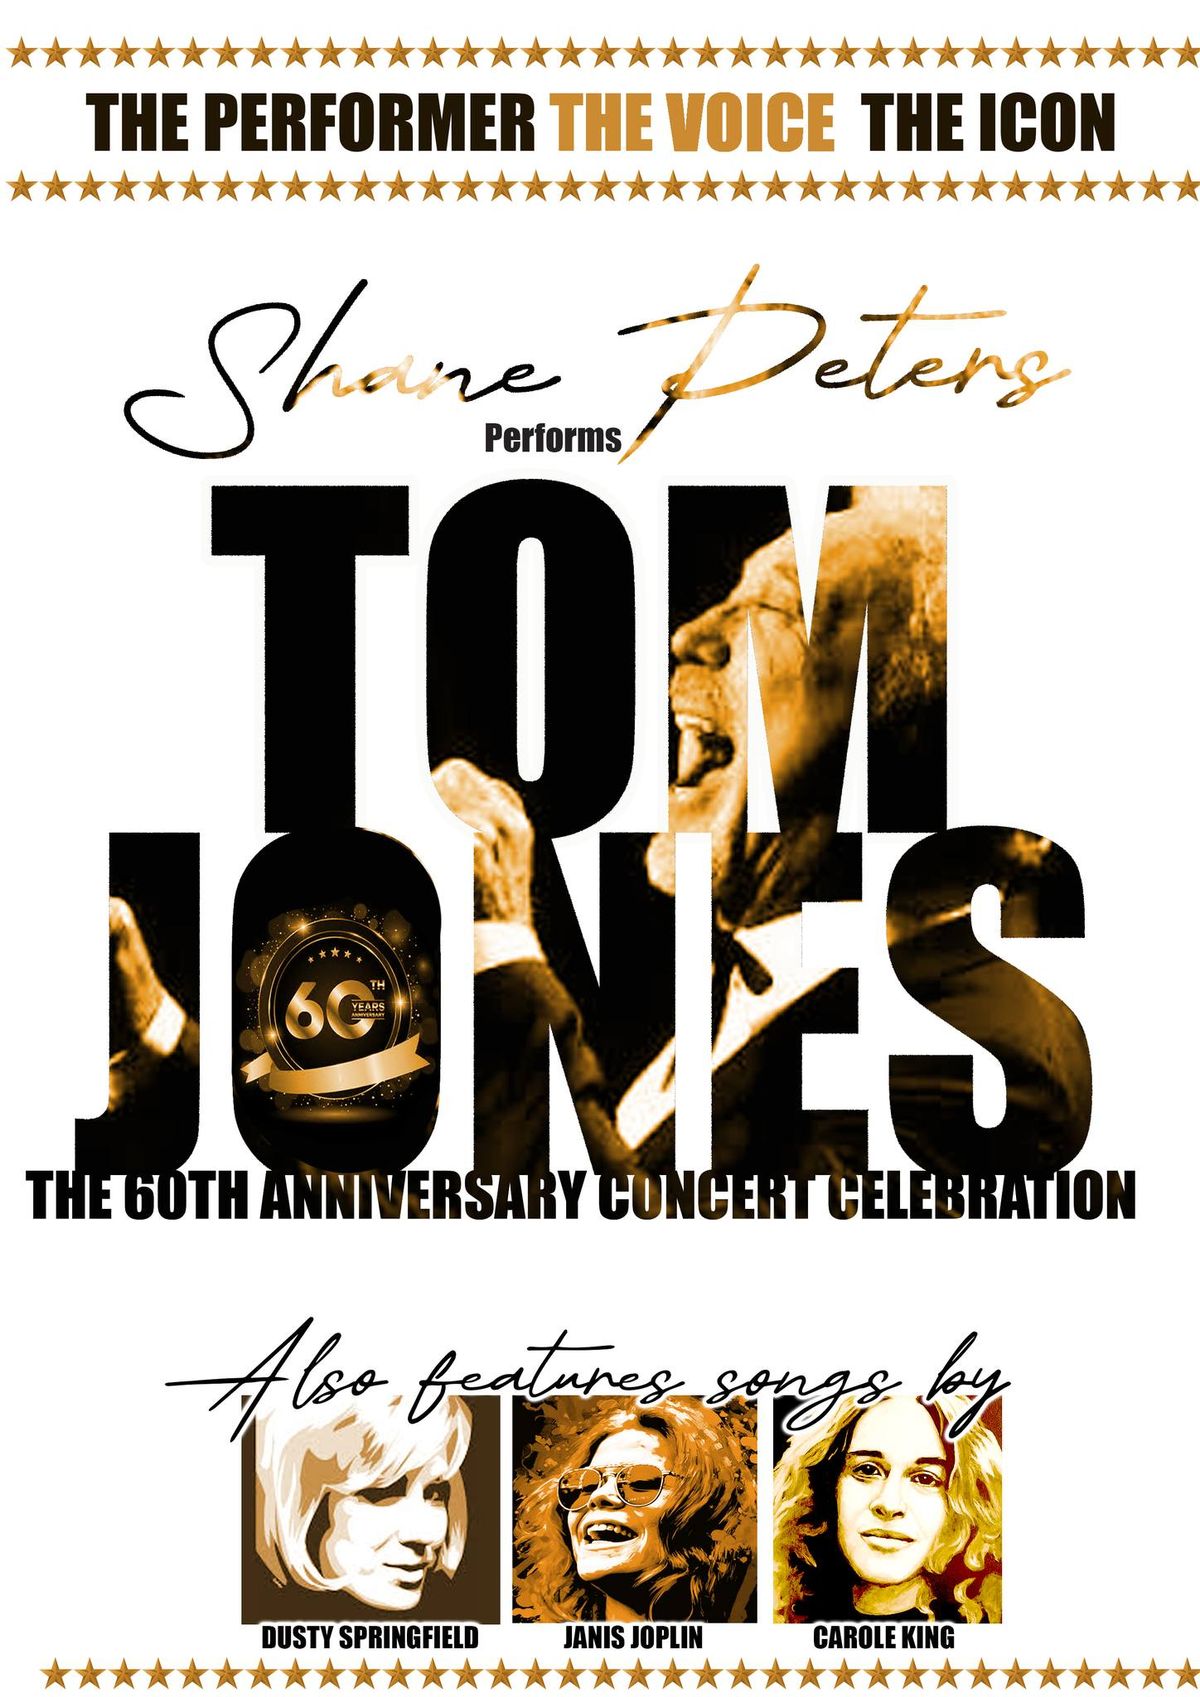 Tom Jones 60th Anniversary Show